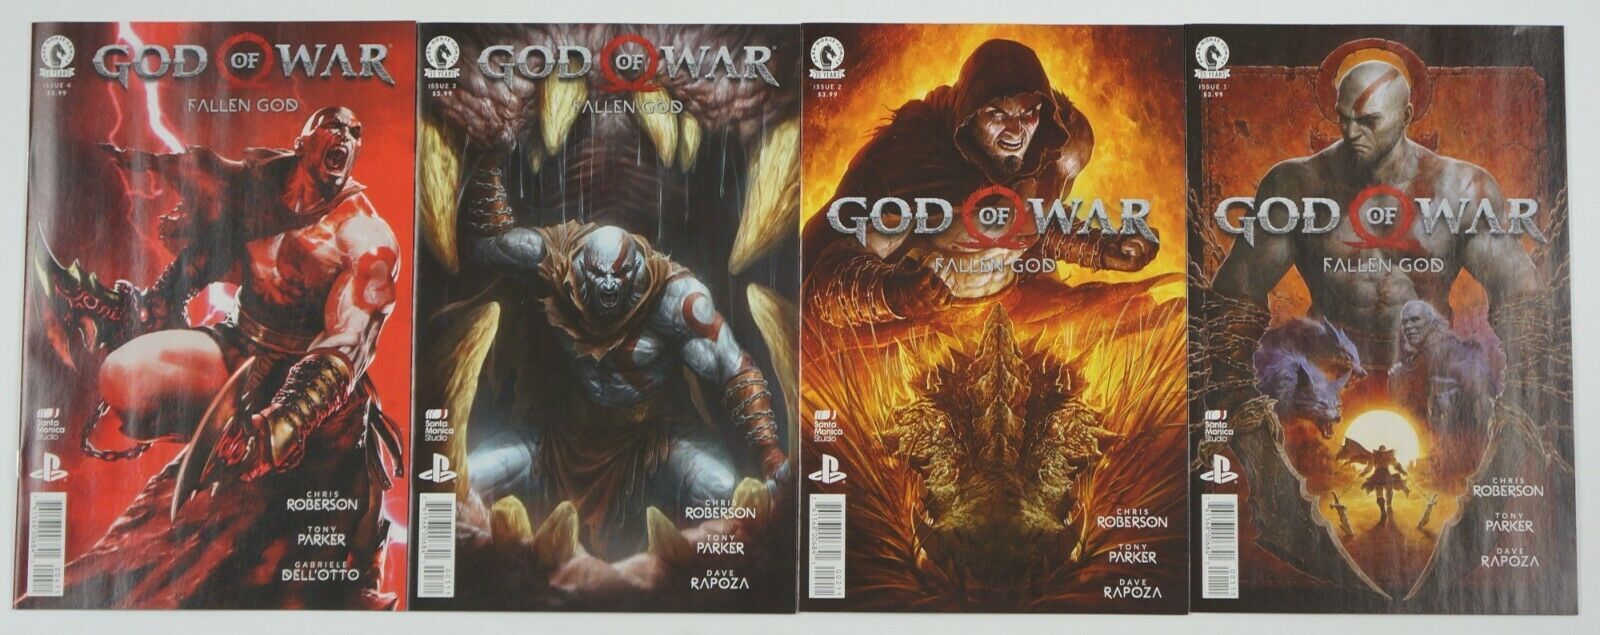 JAN210238 - GOD OF WAR FALLEN GOD #1 (OF 4) (RES) - Previews World